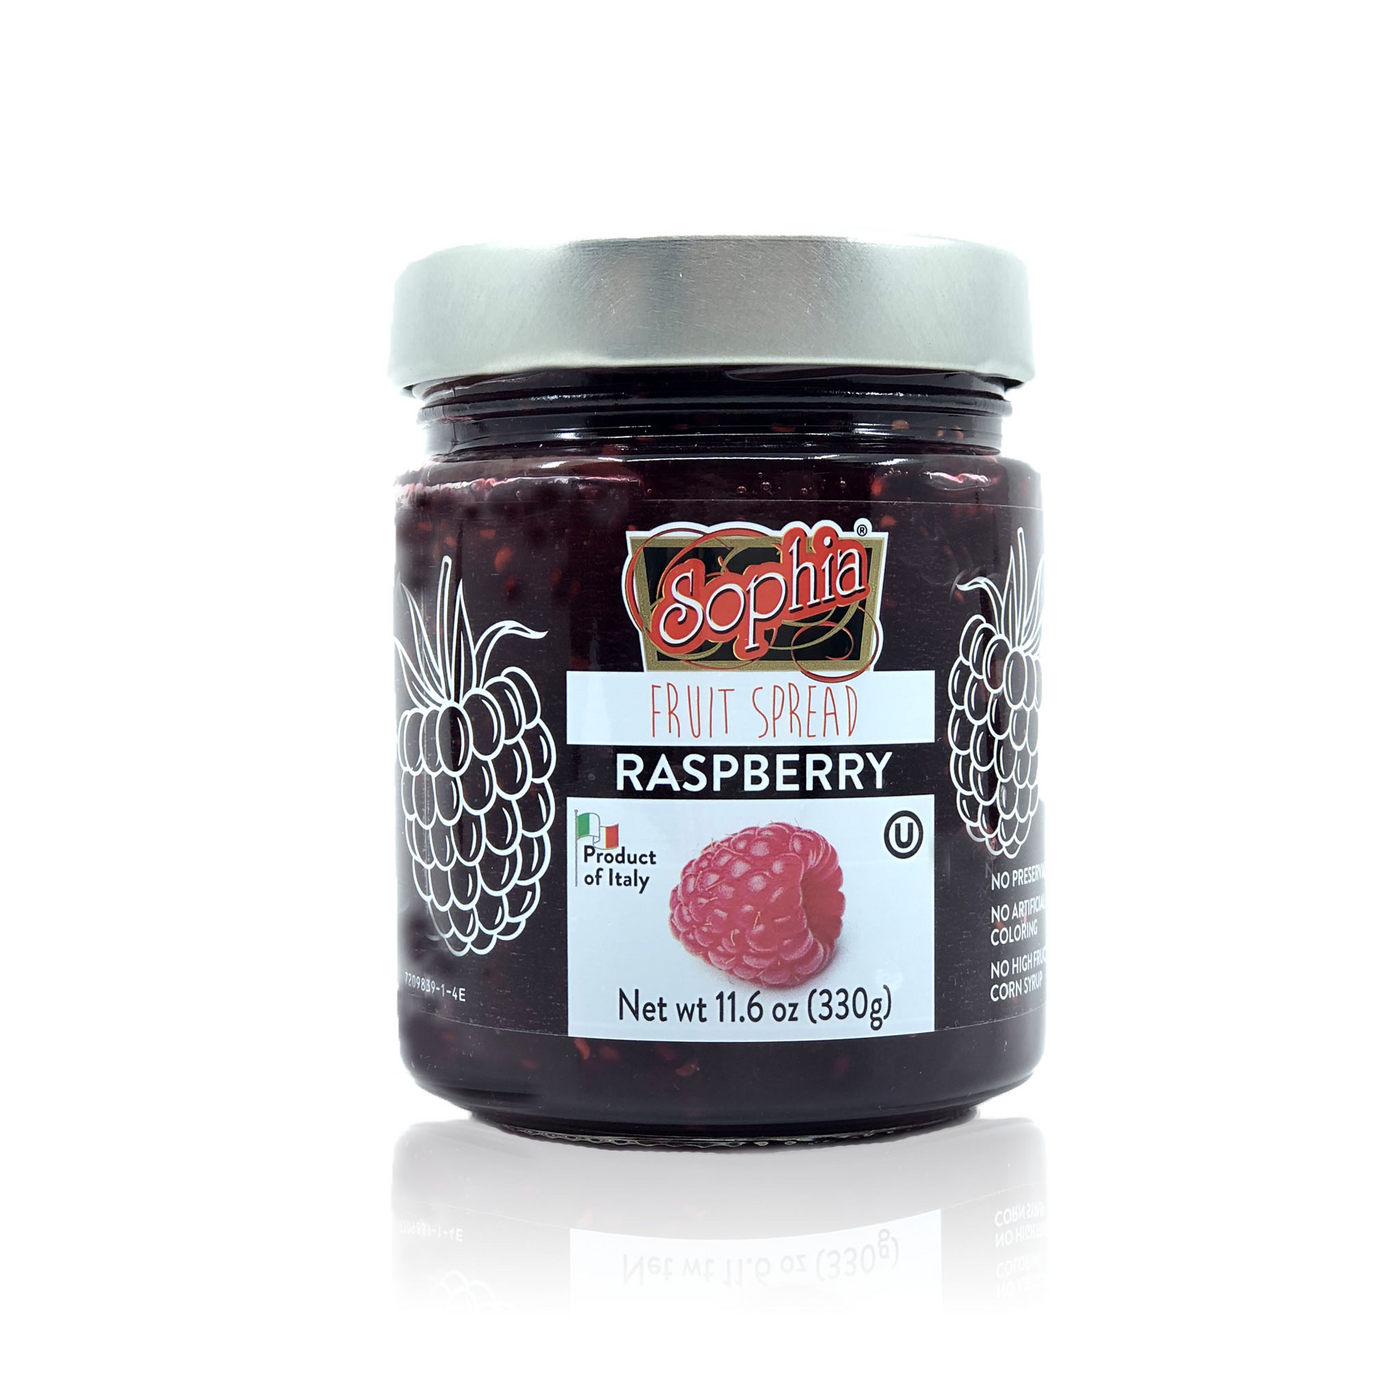 Sophia Fruit Spread - Raspberry Preserves